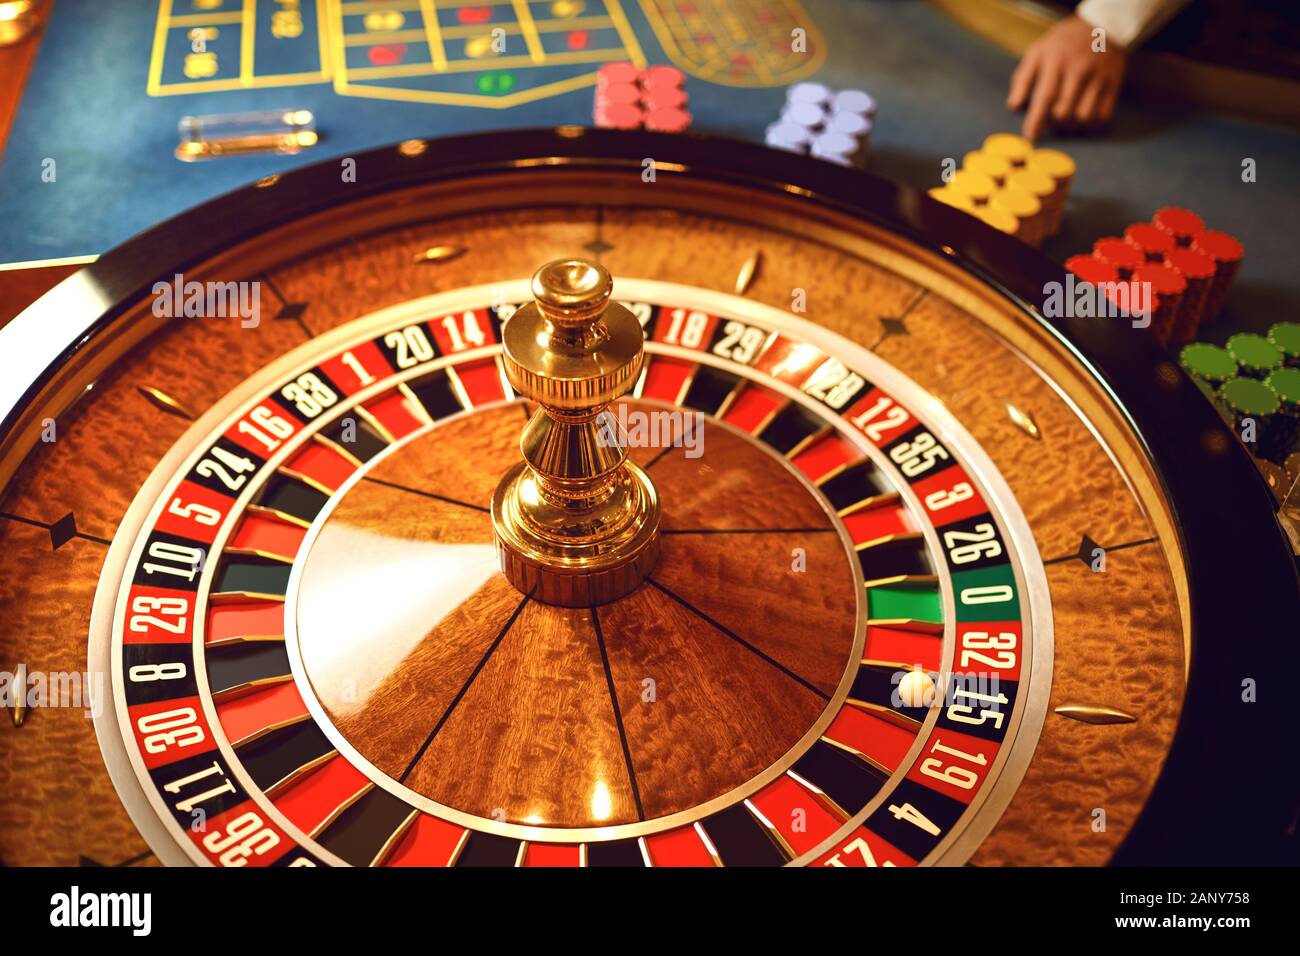 7 Life-Saving Tips About casino